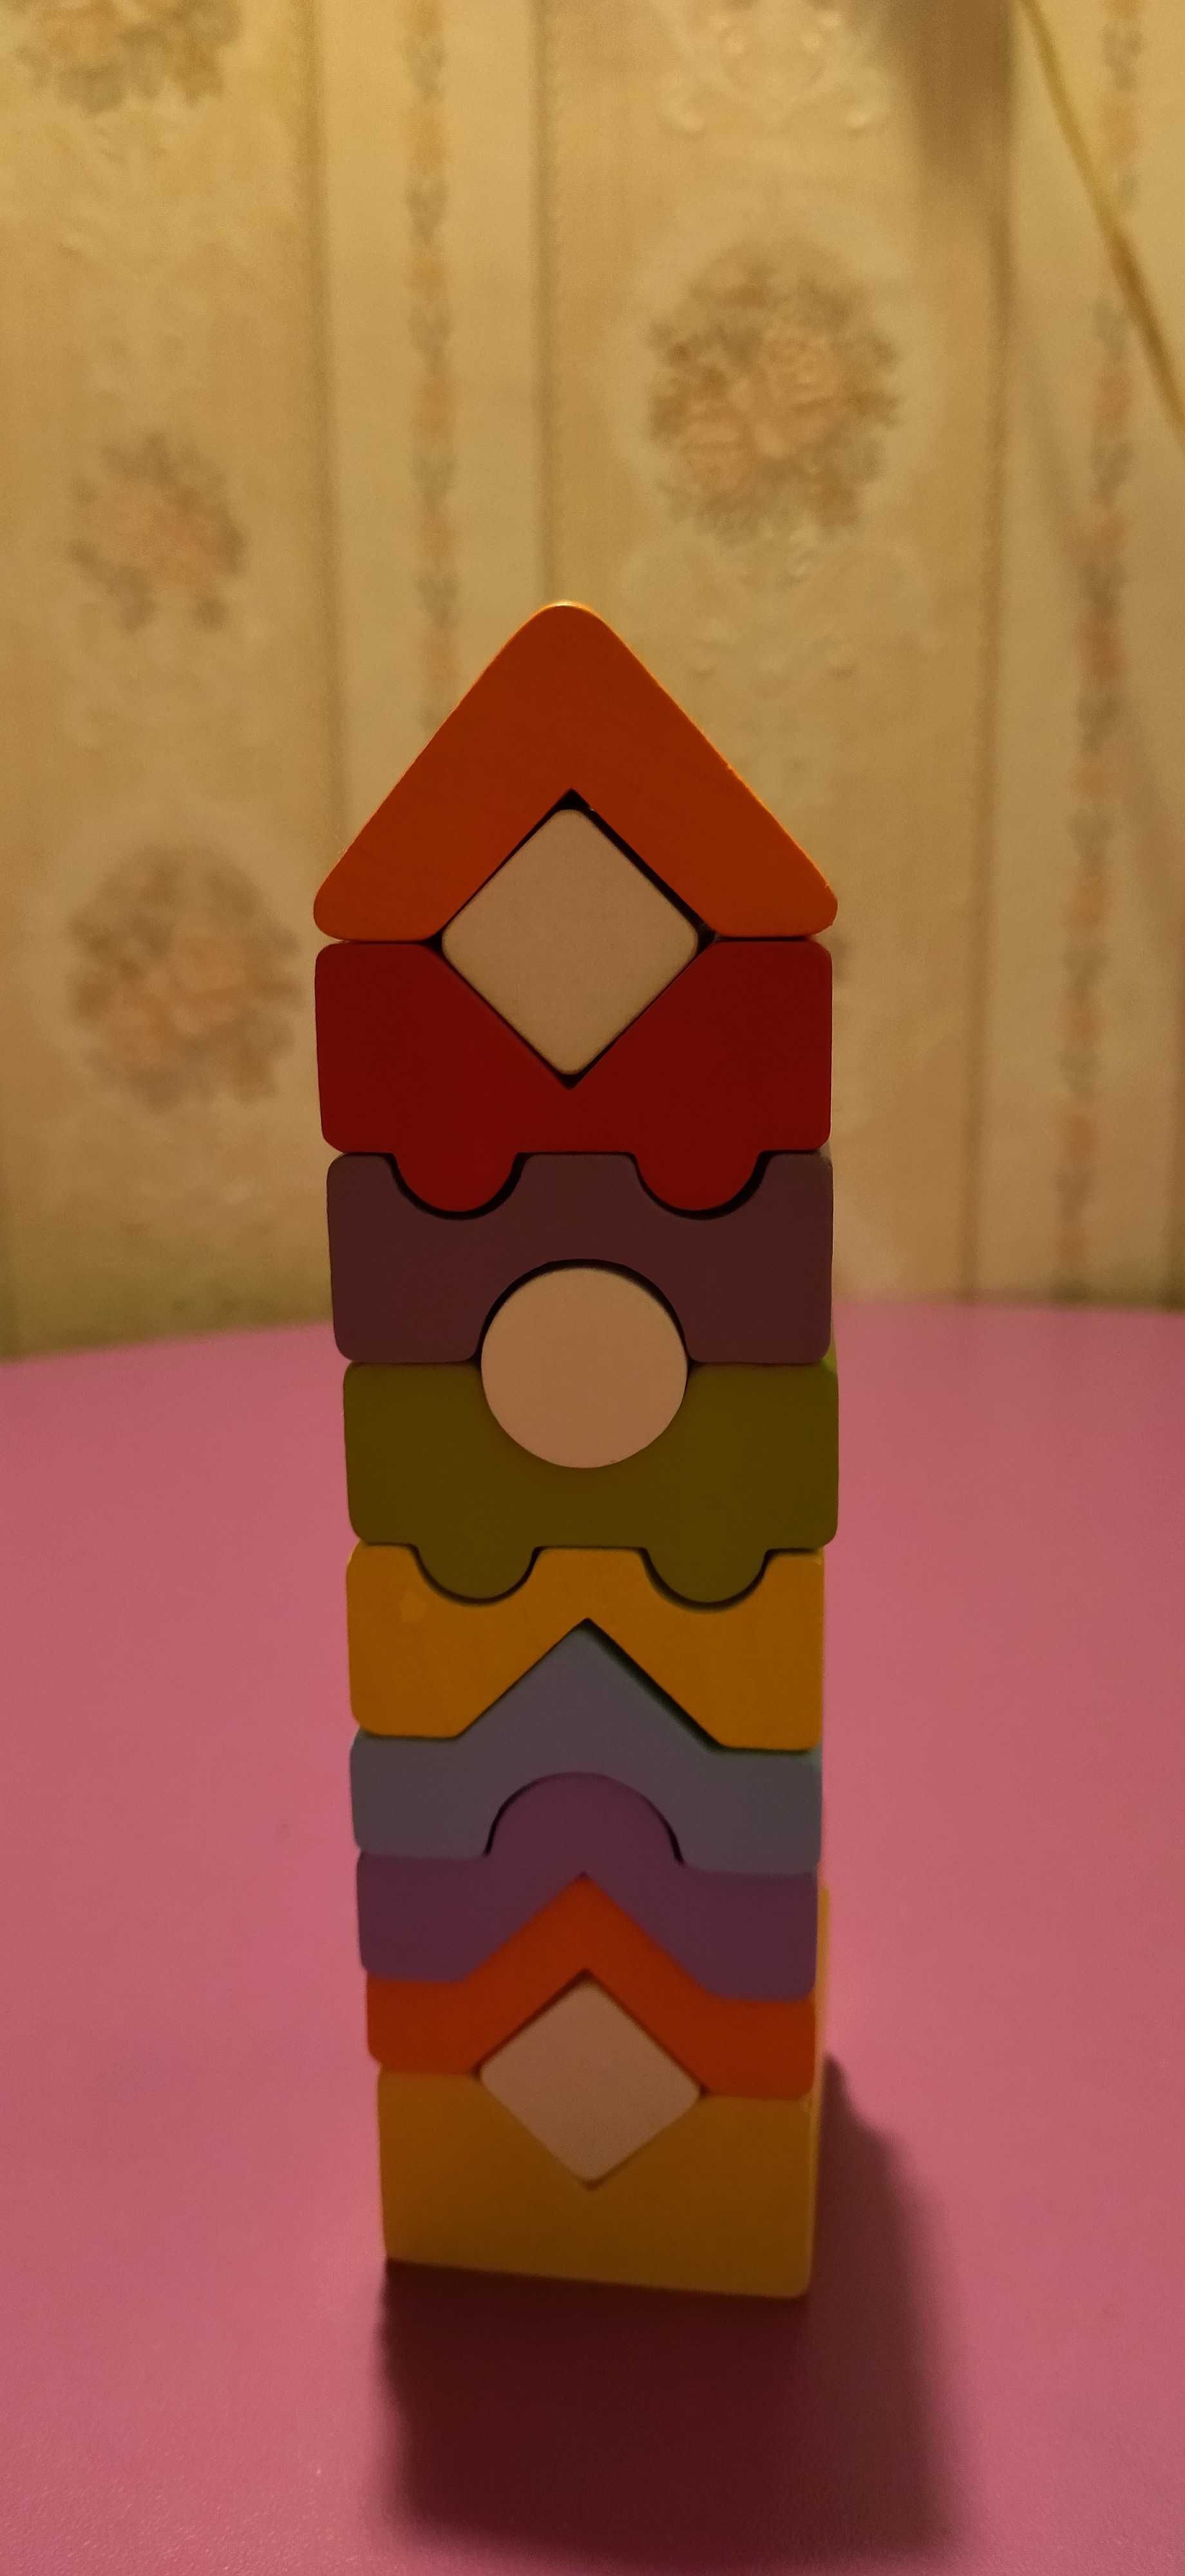 zabawka edukacyjna piramida